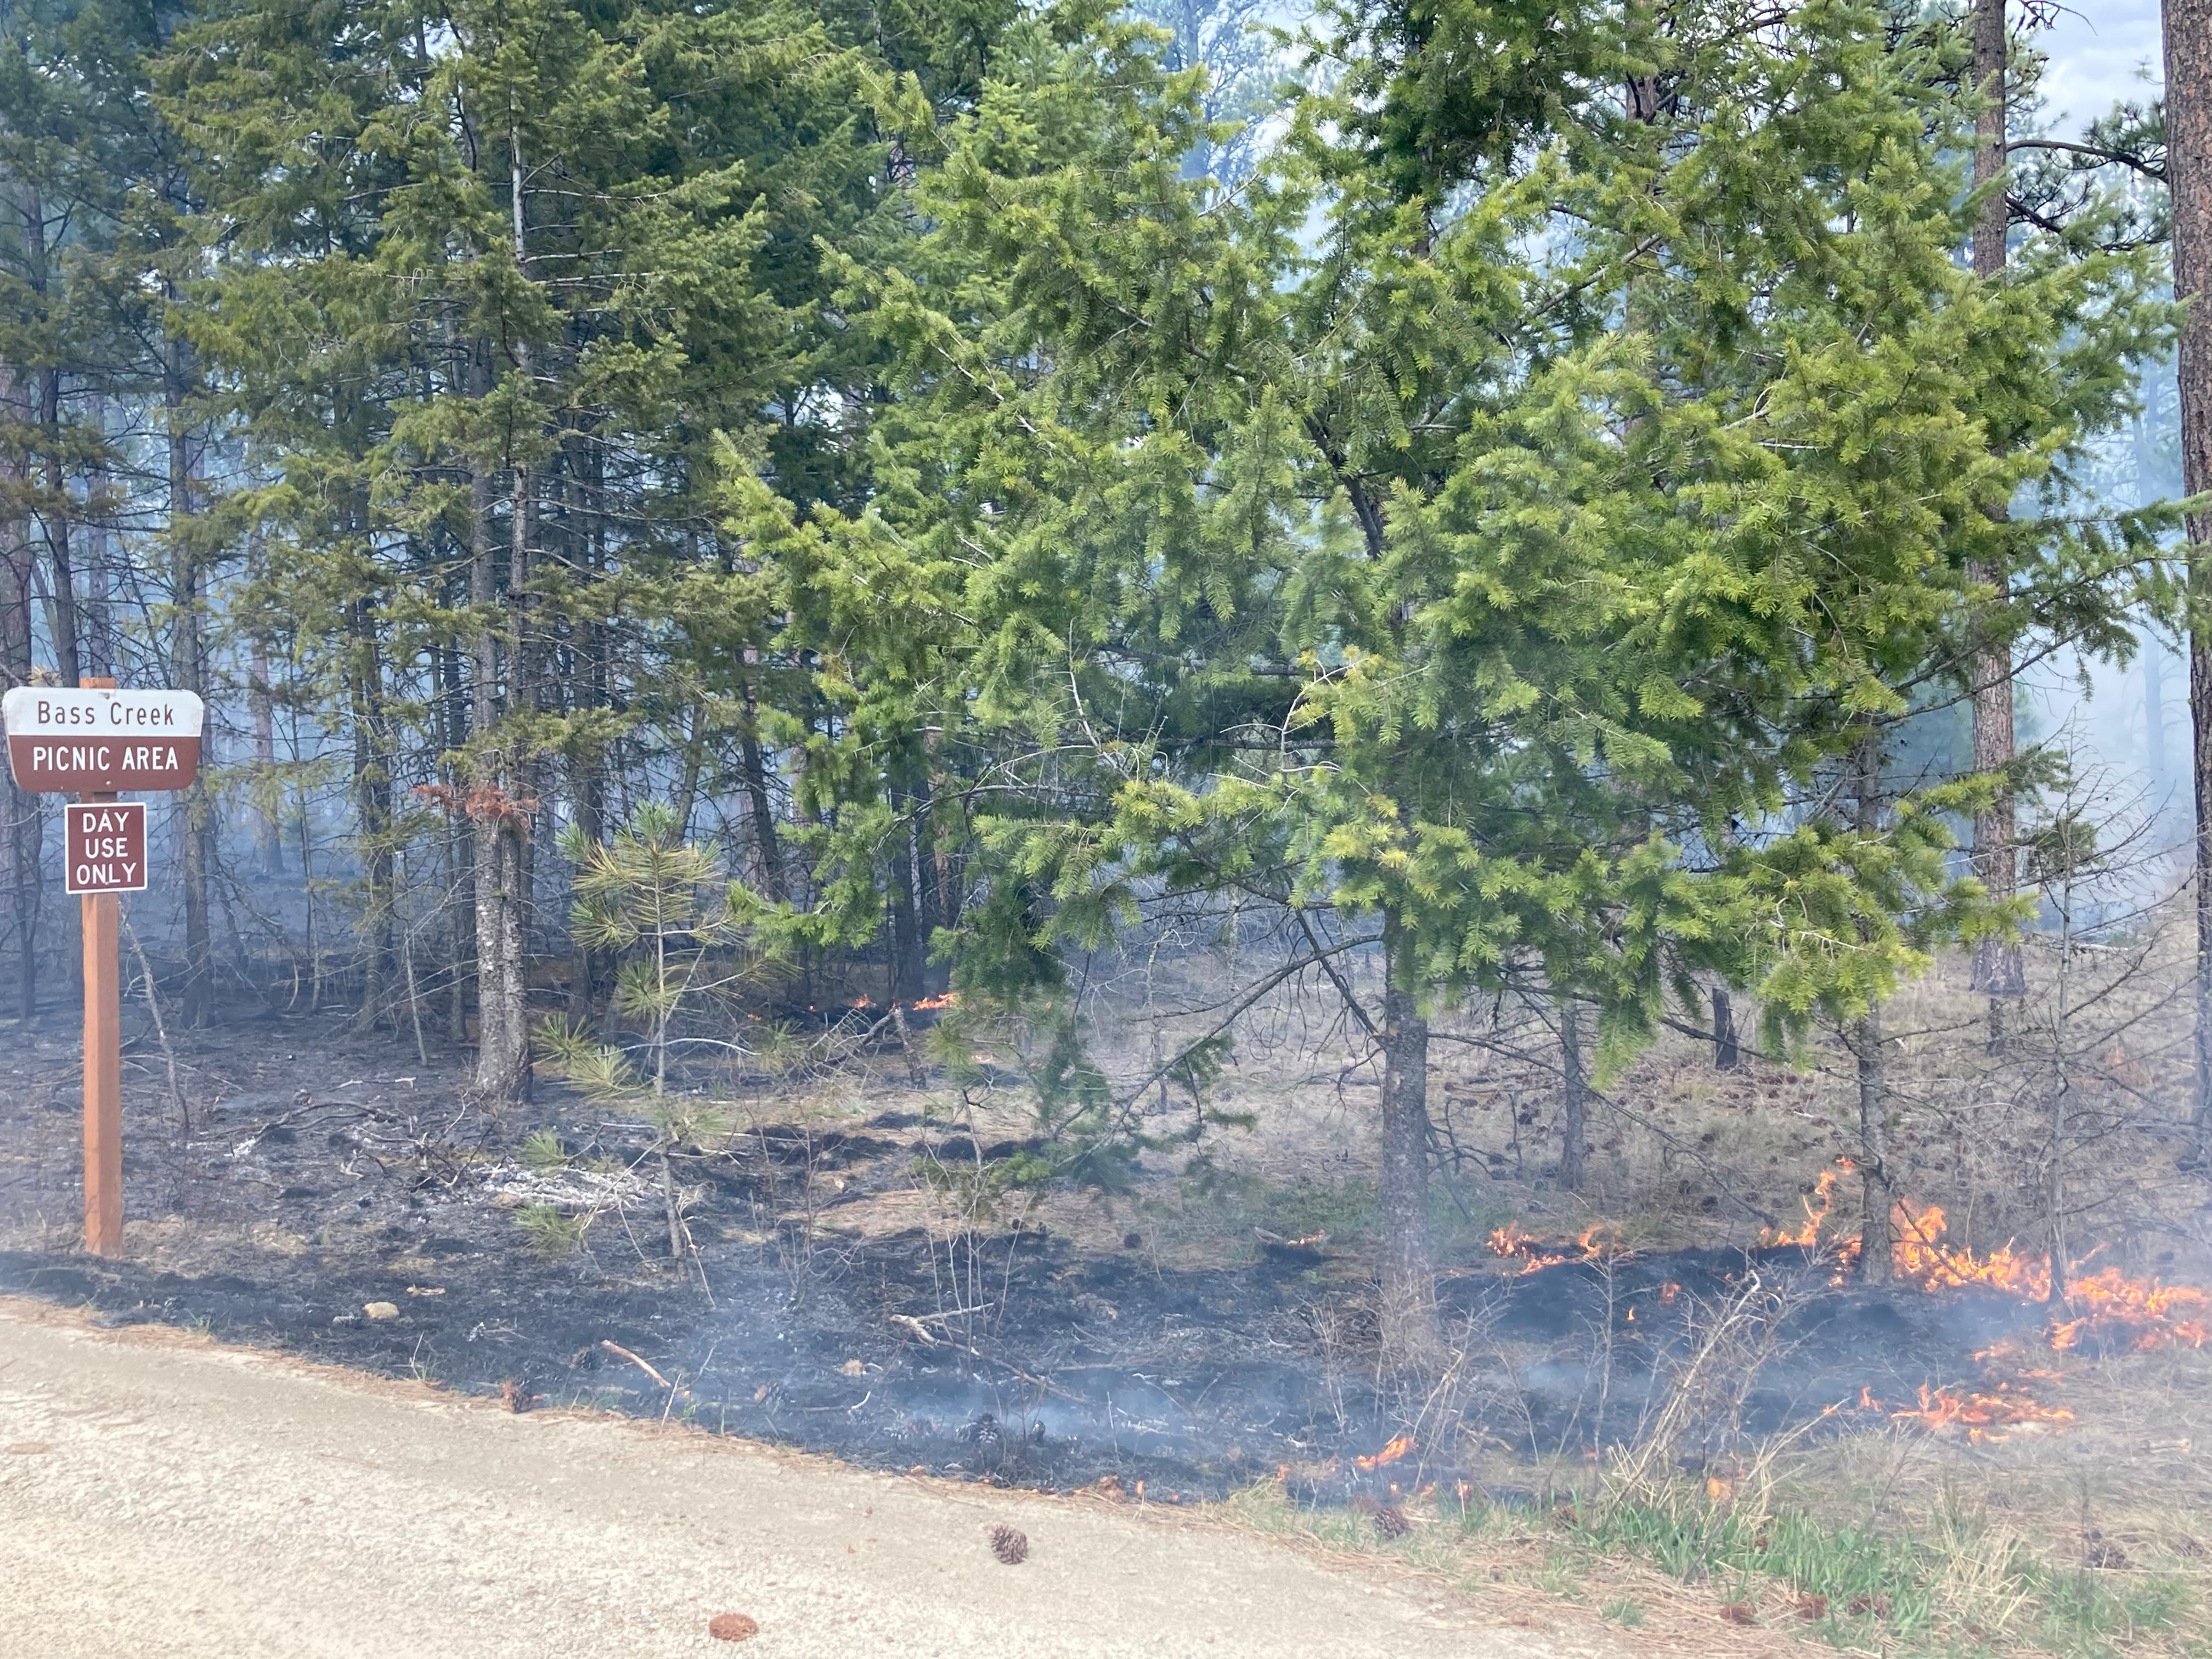 Fire consuming dead vegetation